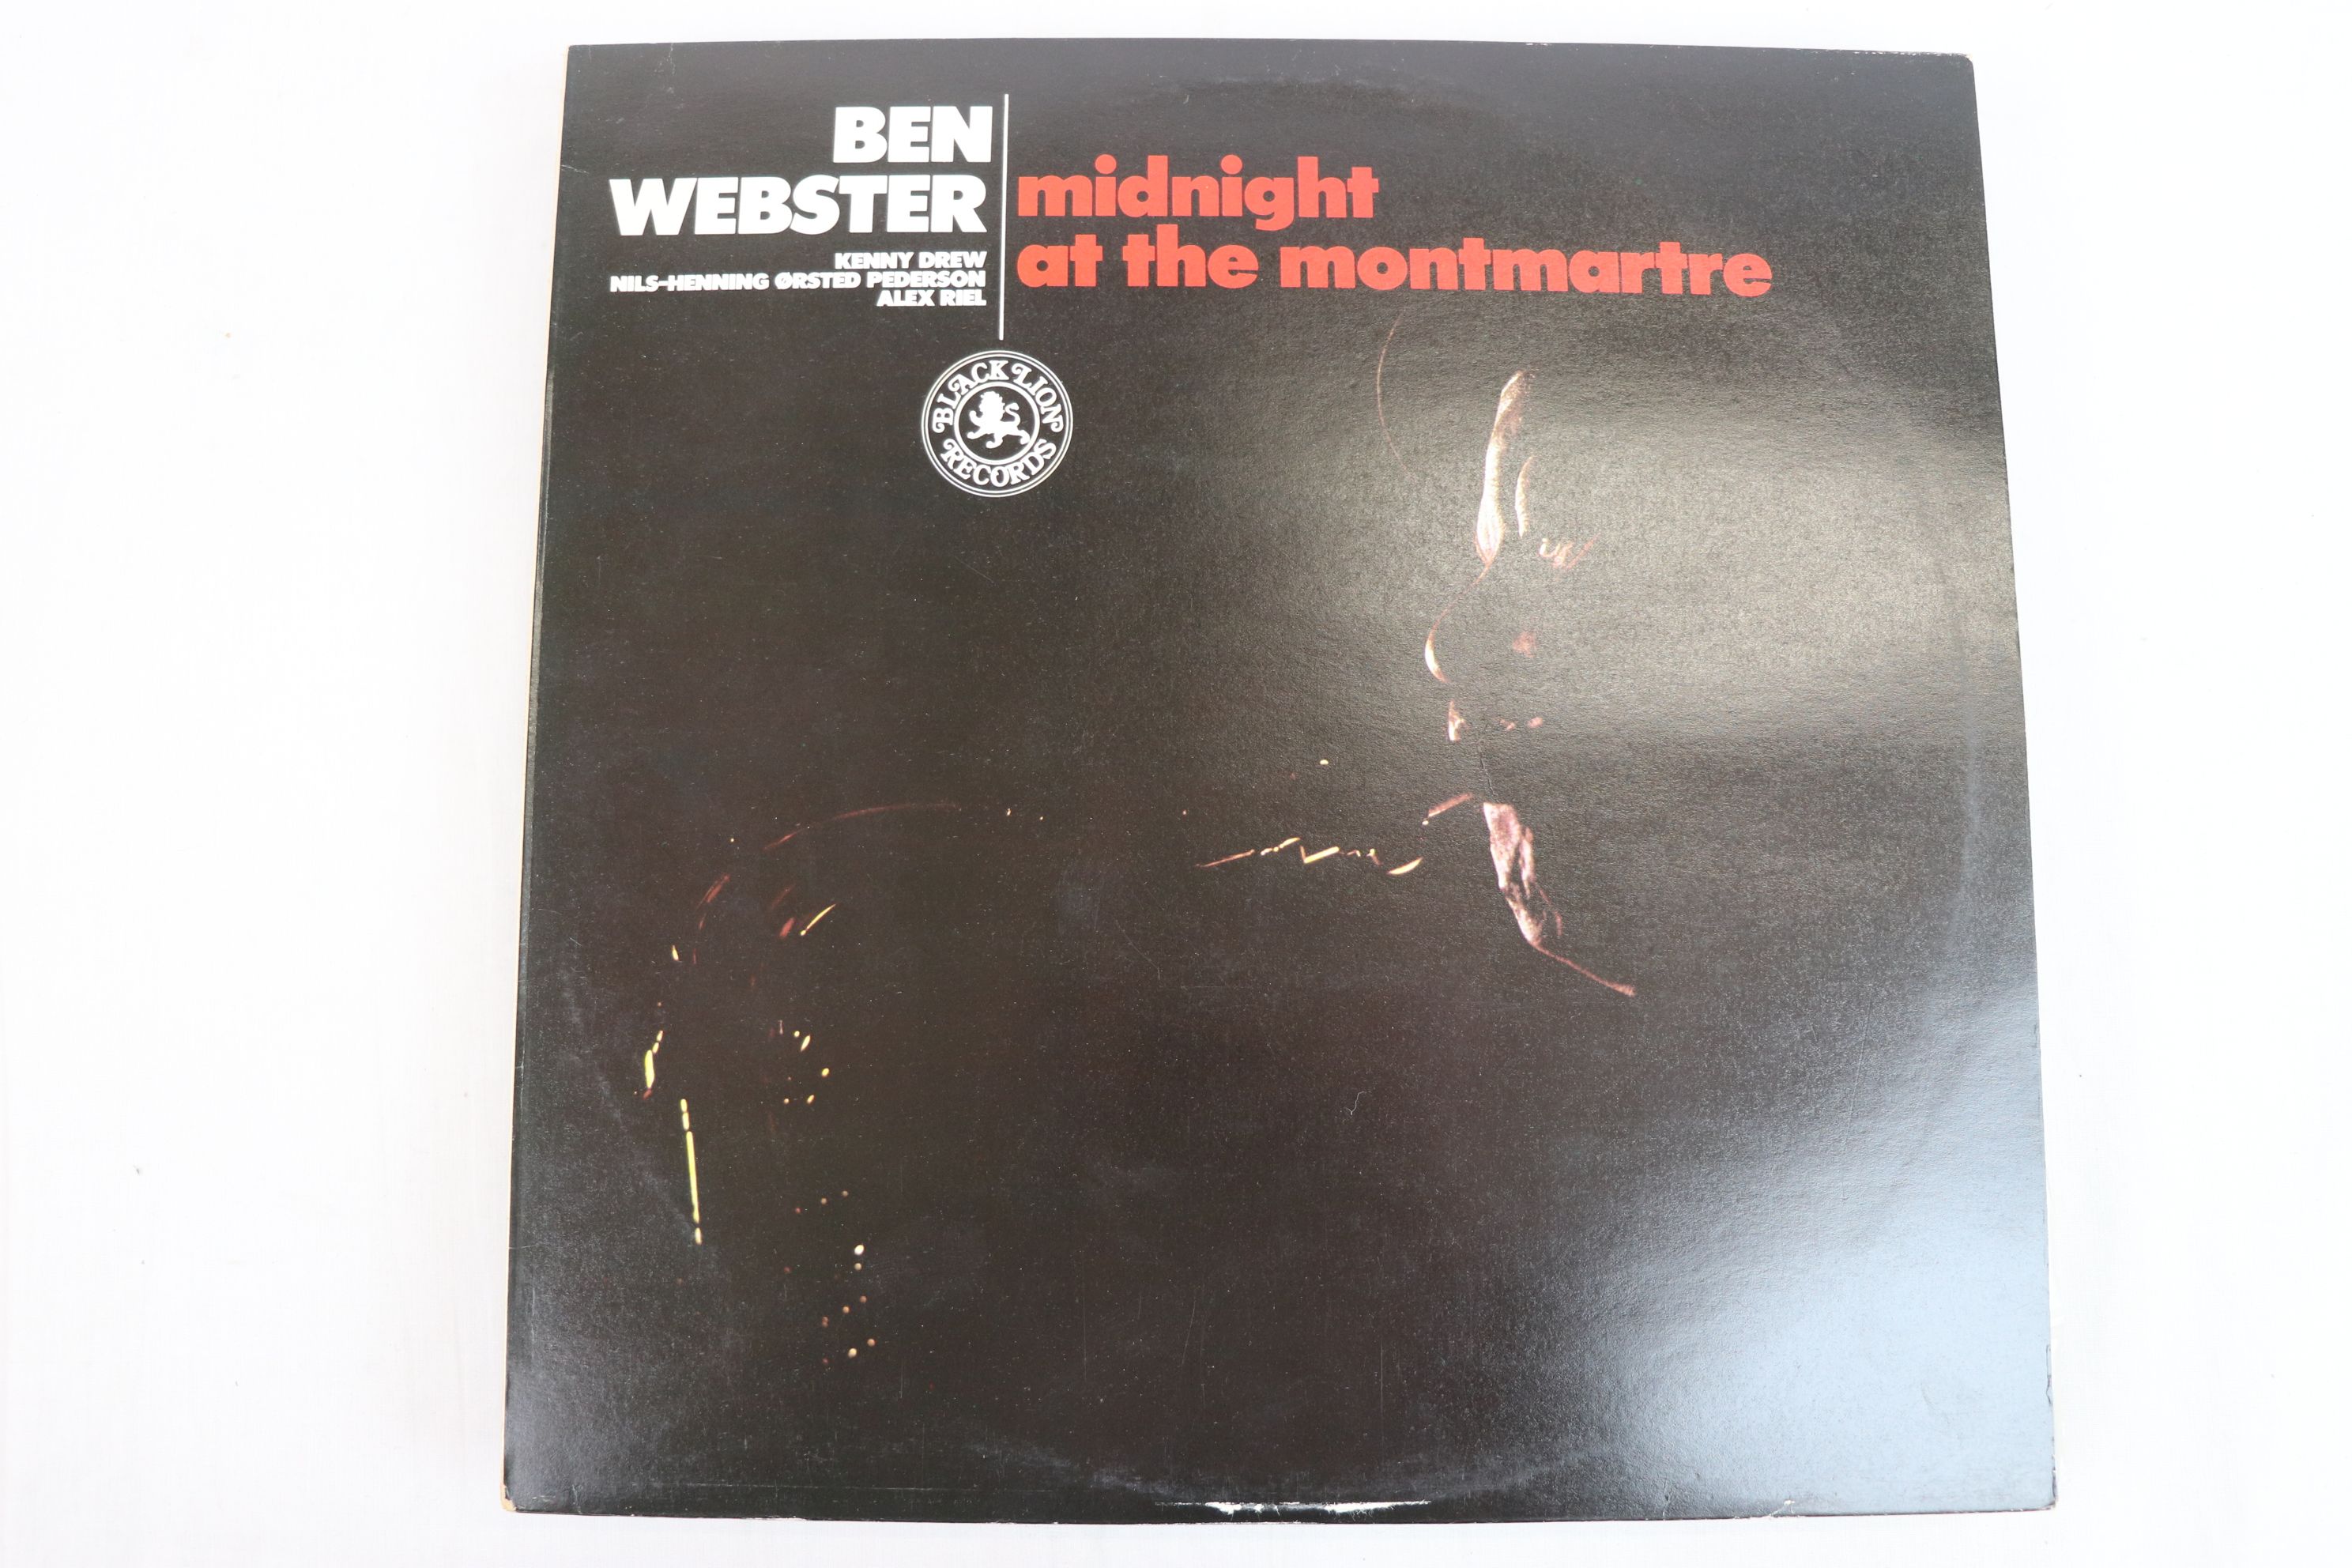 Vinyl - Collection of 15 x Jazz vinyl LP's to include Meditations - John Coltrane (Impulse A- - Image 7 of 17